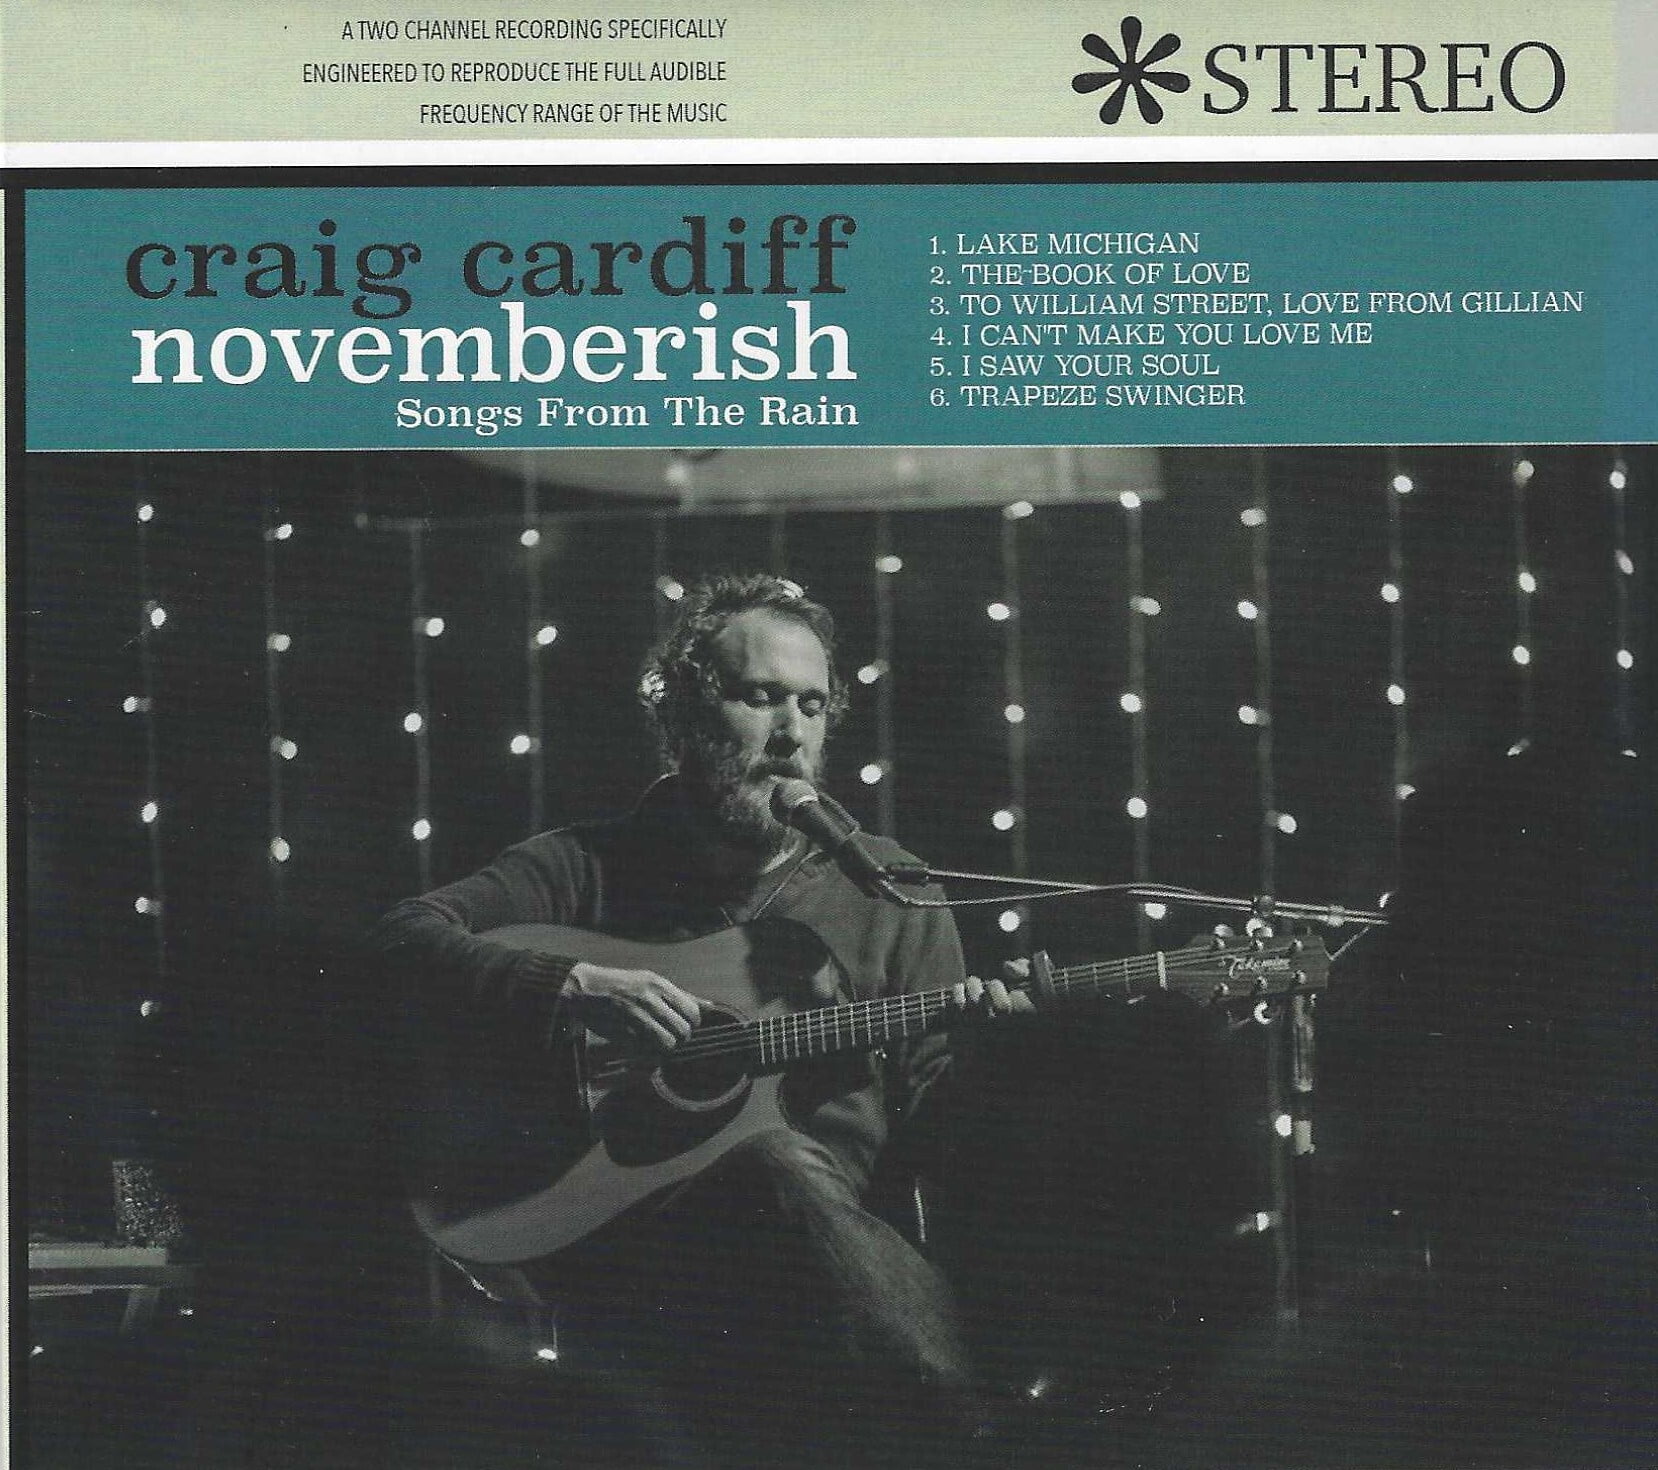 Craig Cardiff - Novemberish (Songs From The Rain) - CD pic